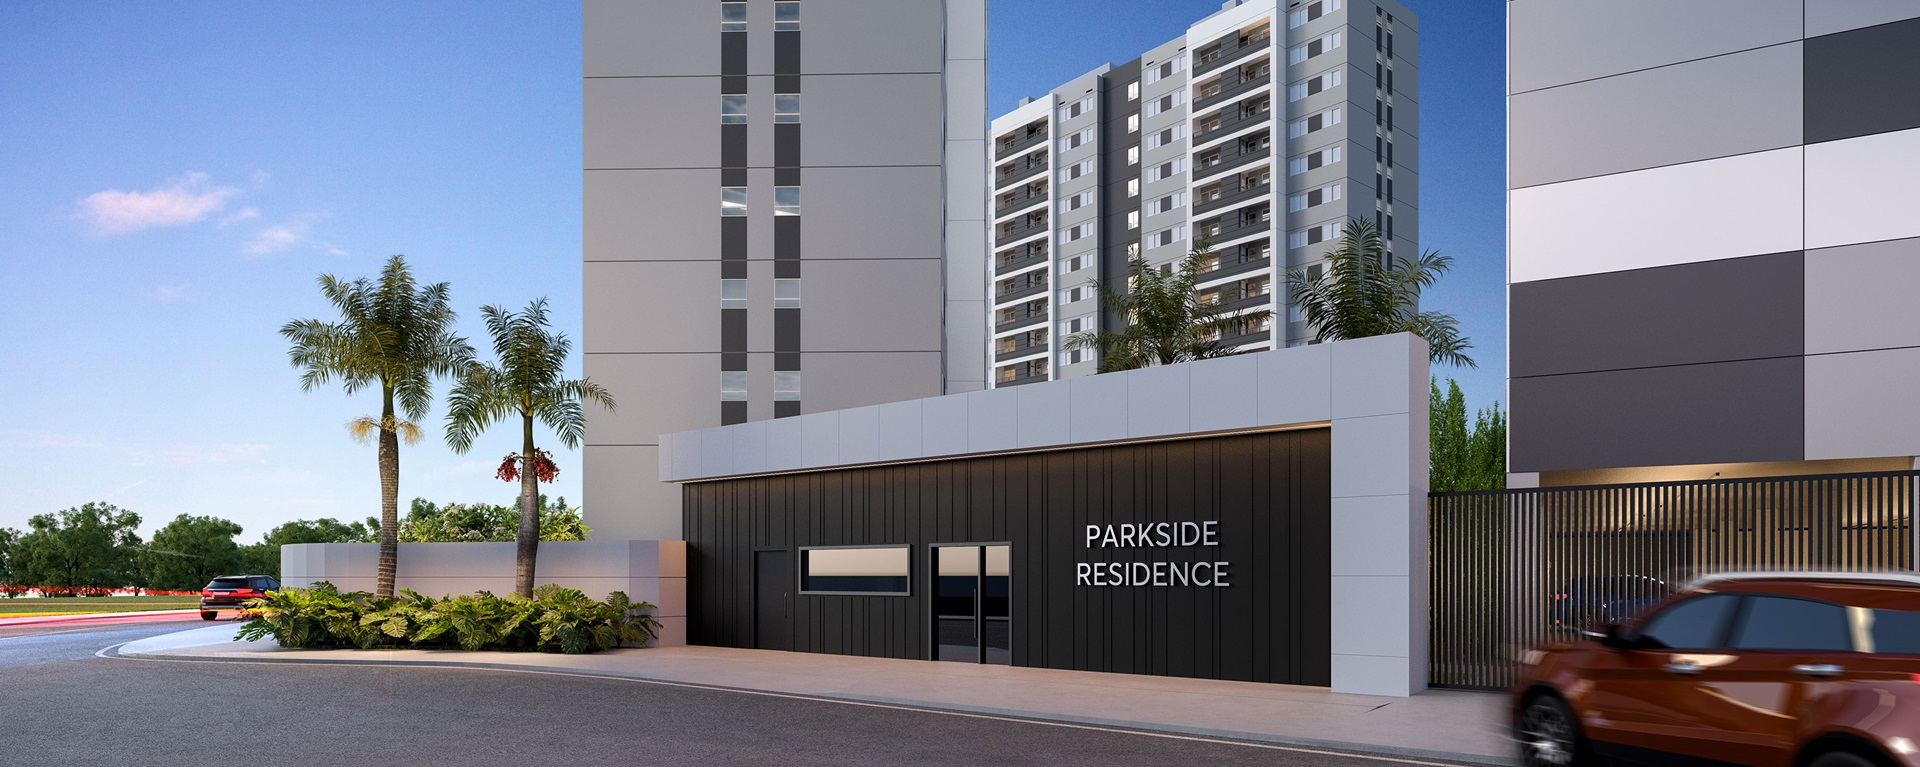 Parkside Residence